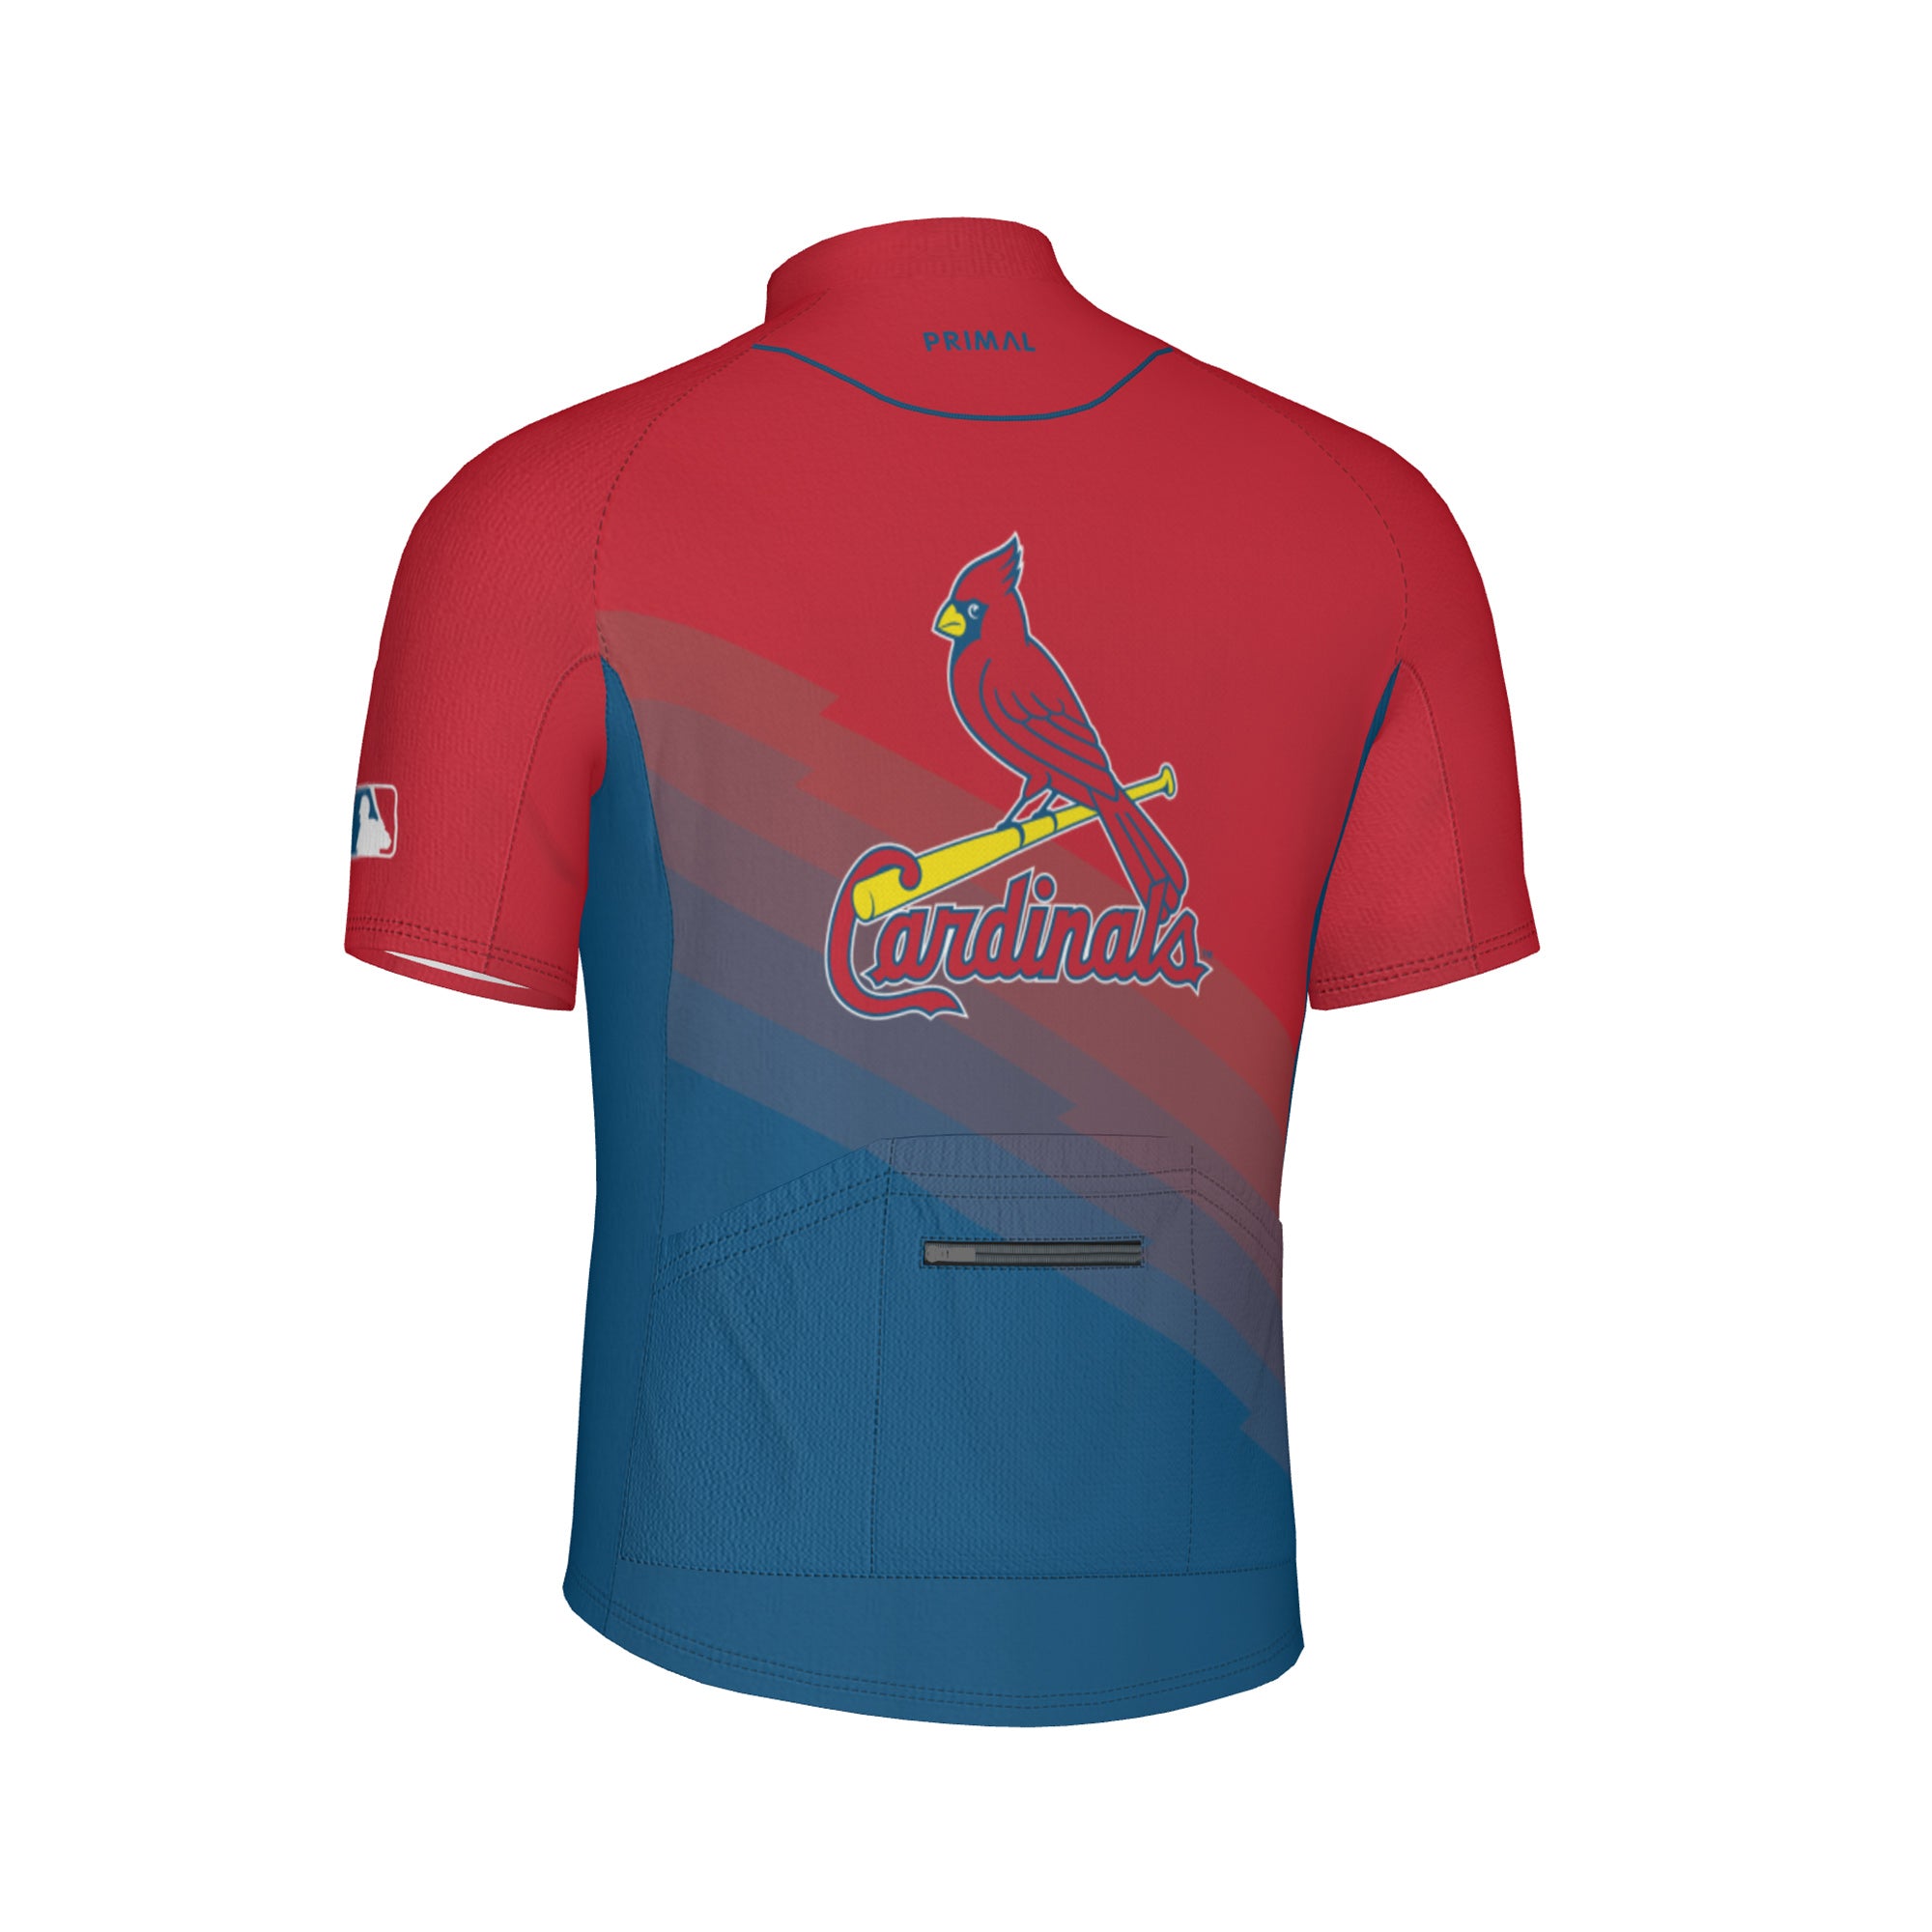 Official Men's St. Louis Cardinals Gear, Mens Cardinals Apparel